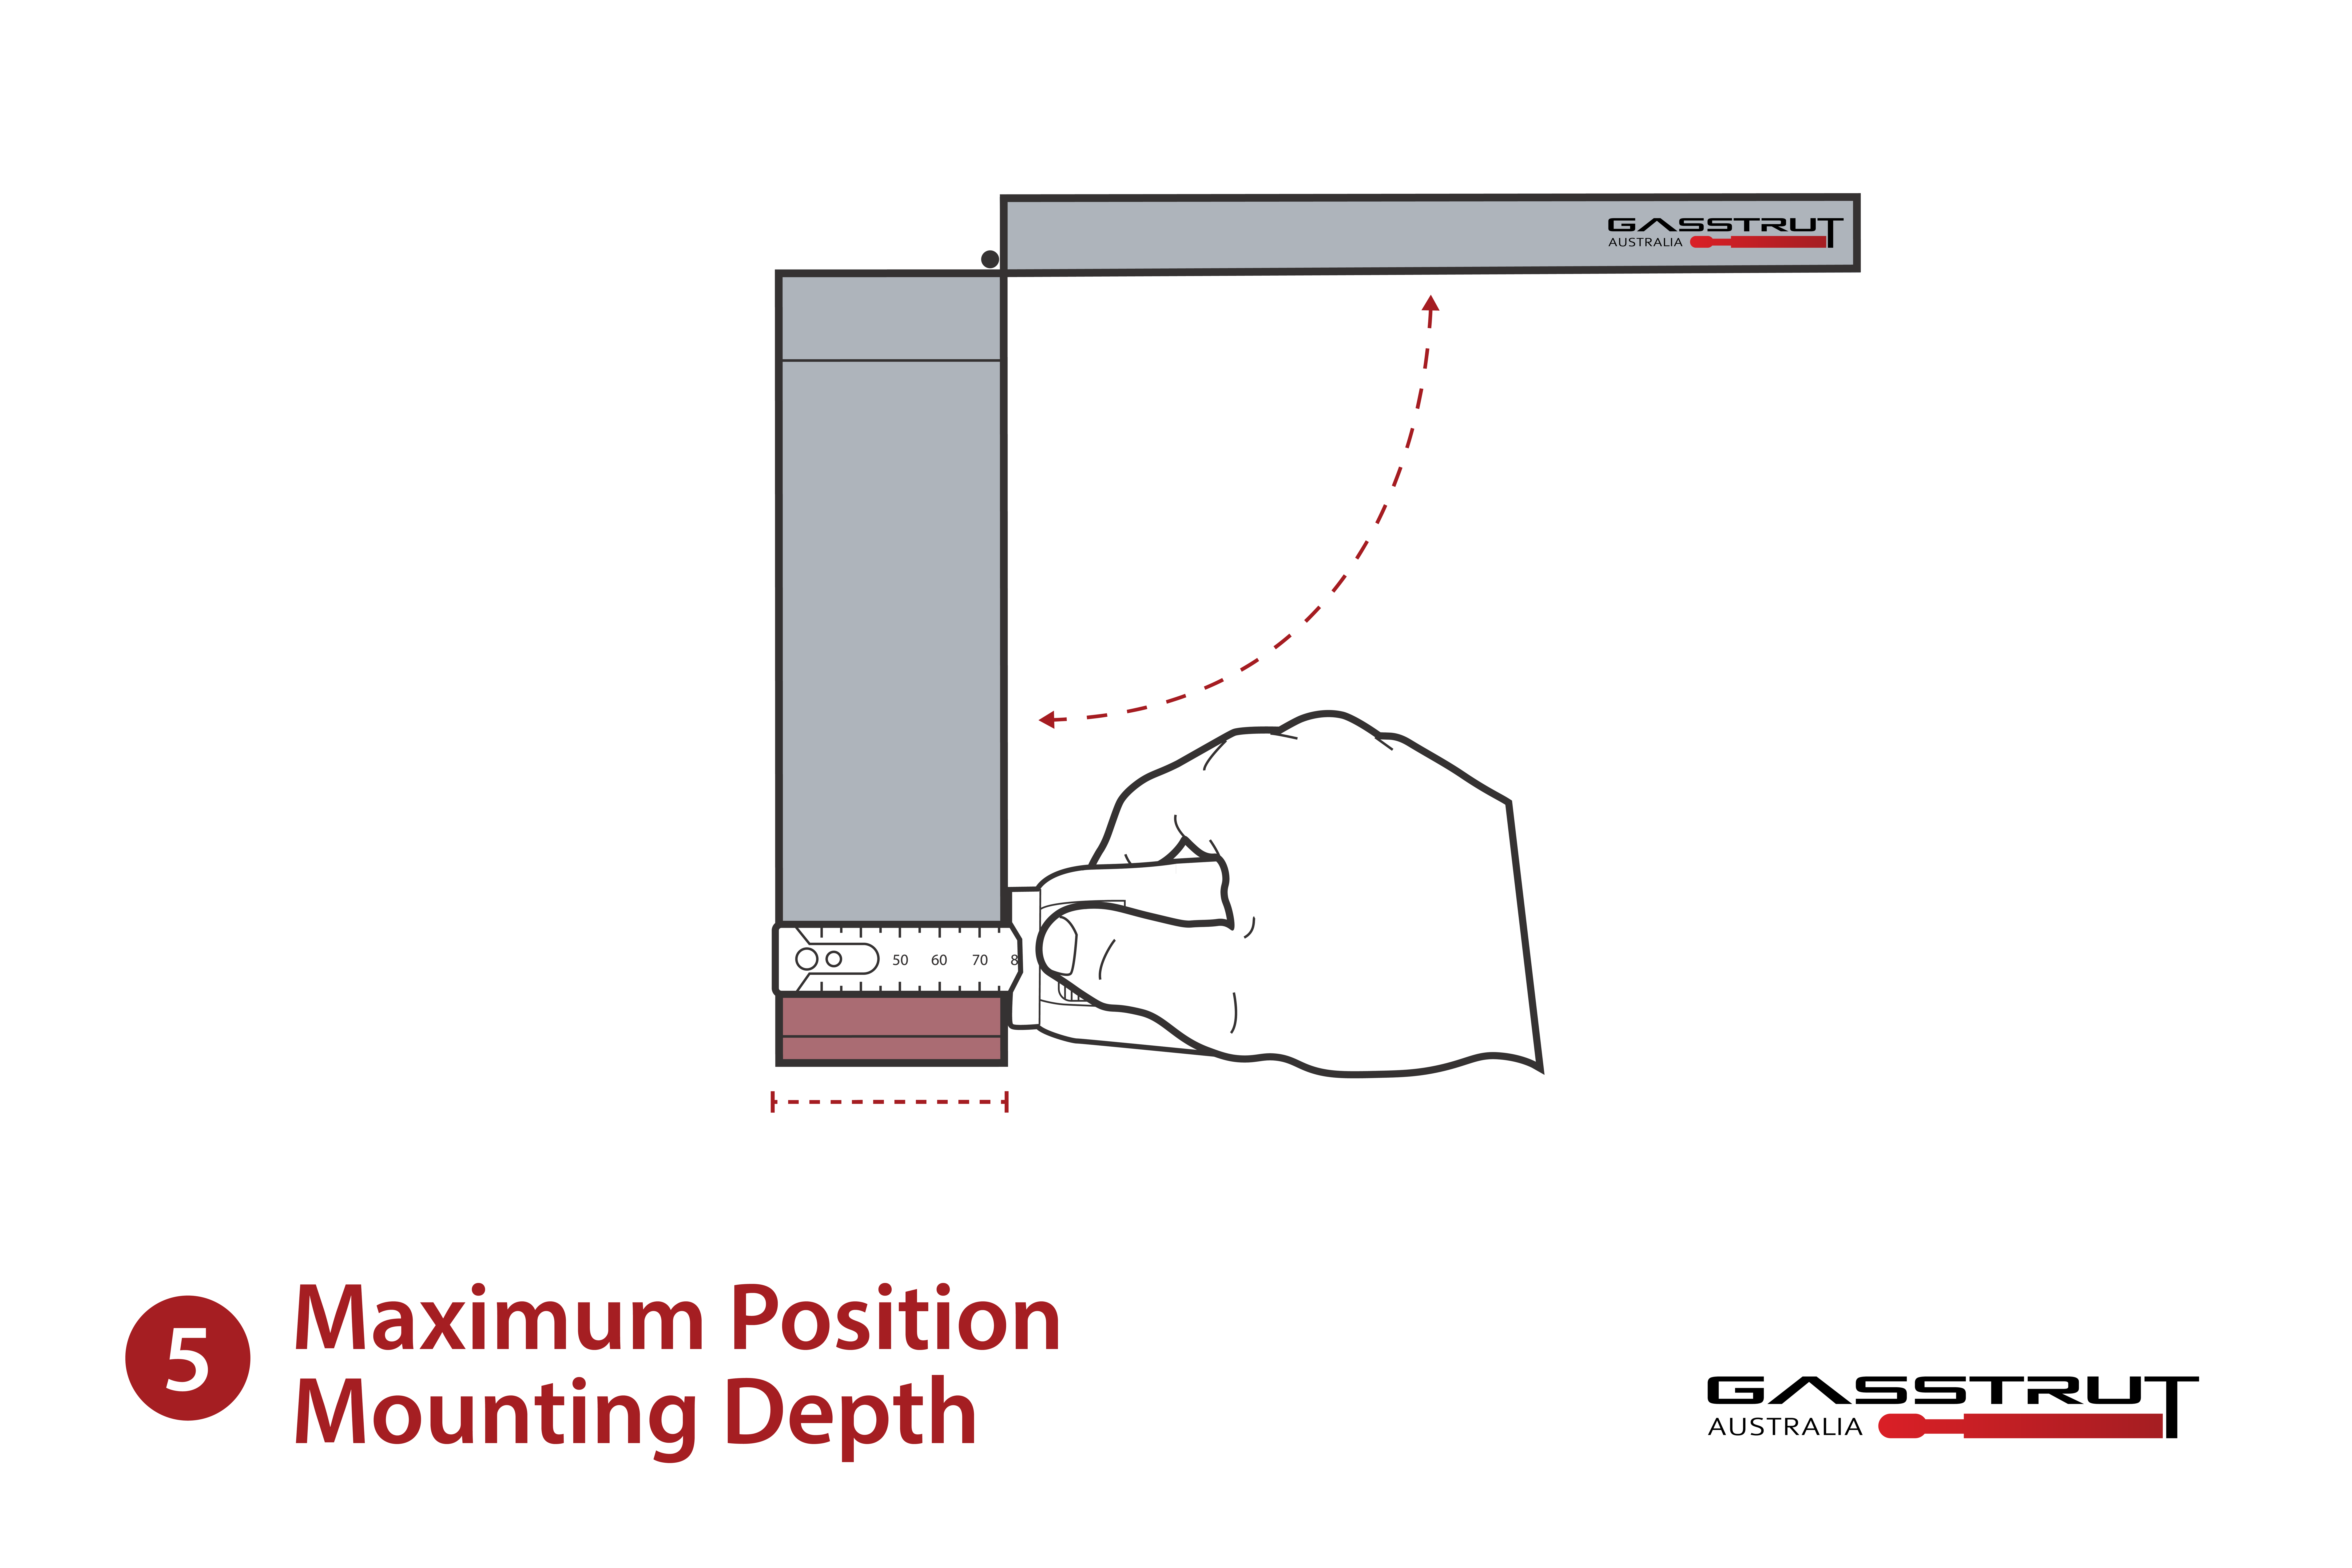 GS_Vertical_Lift_Maximum Position Mounting Depth